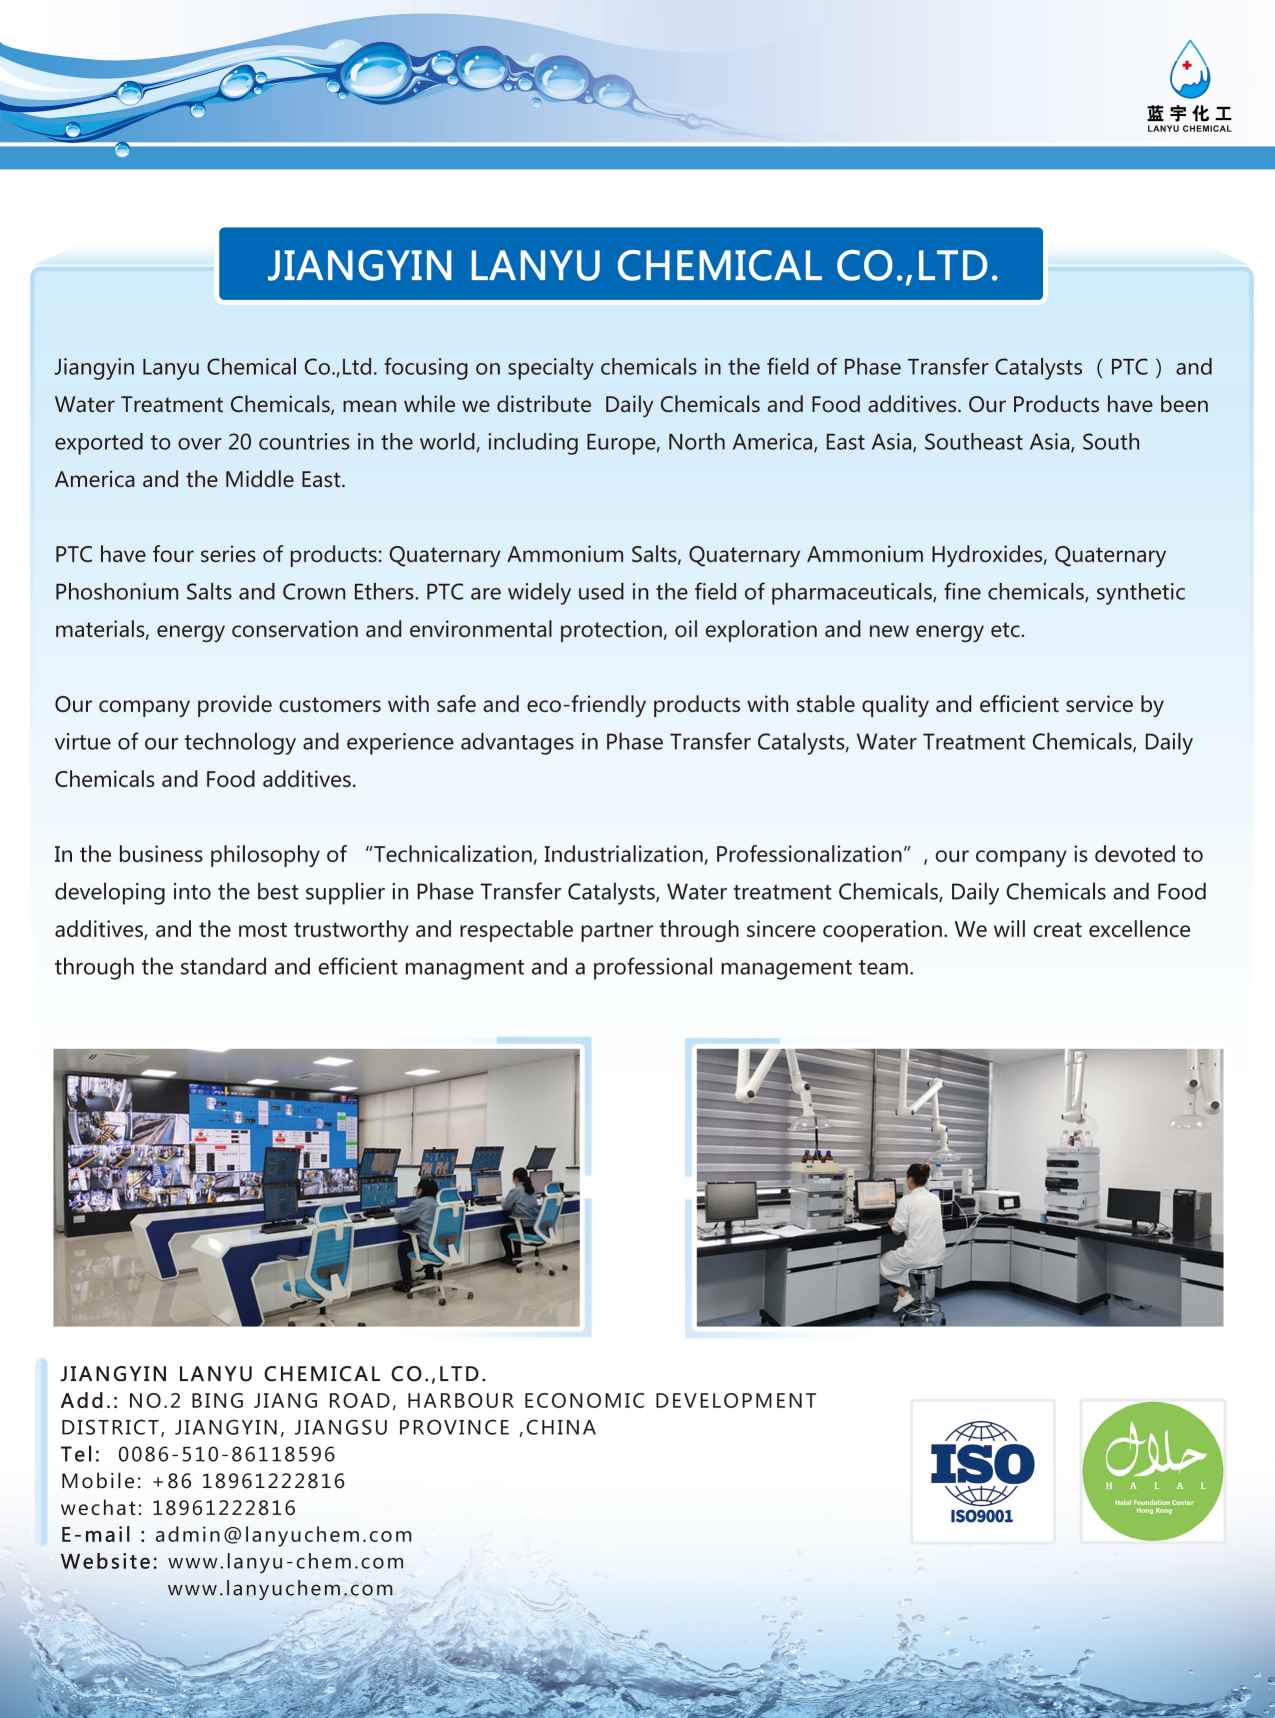 About us-Jiangyin Lanyu Chemical Co.,Ltd.